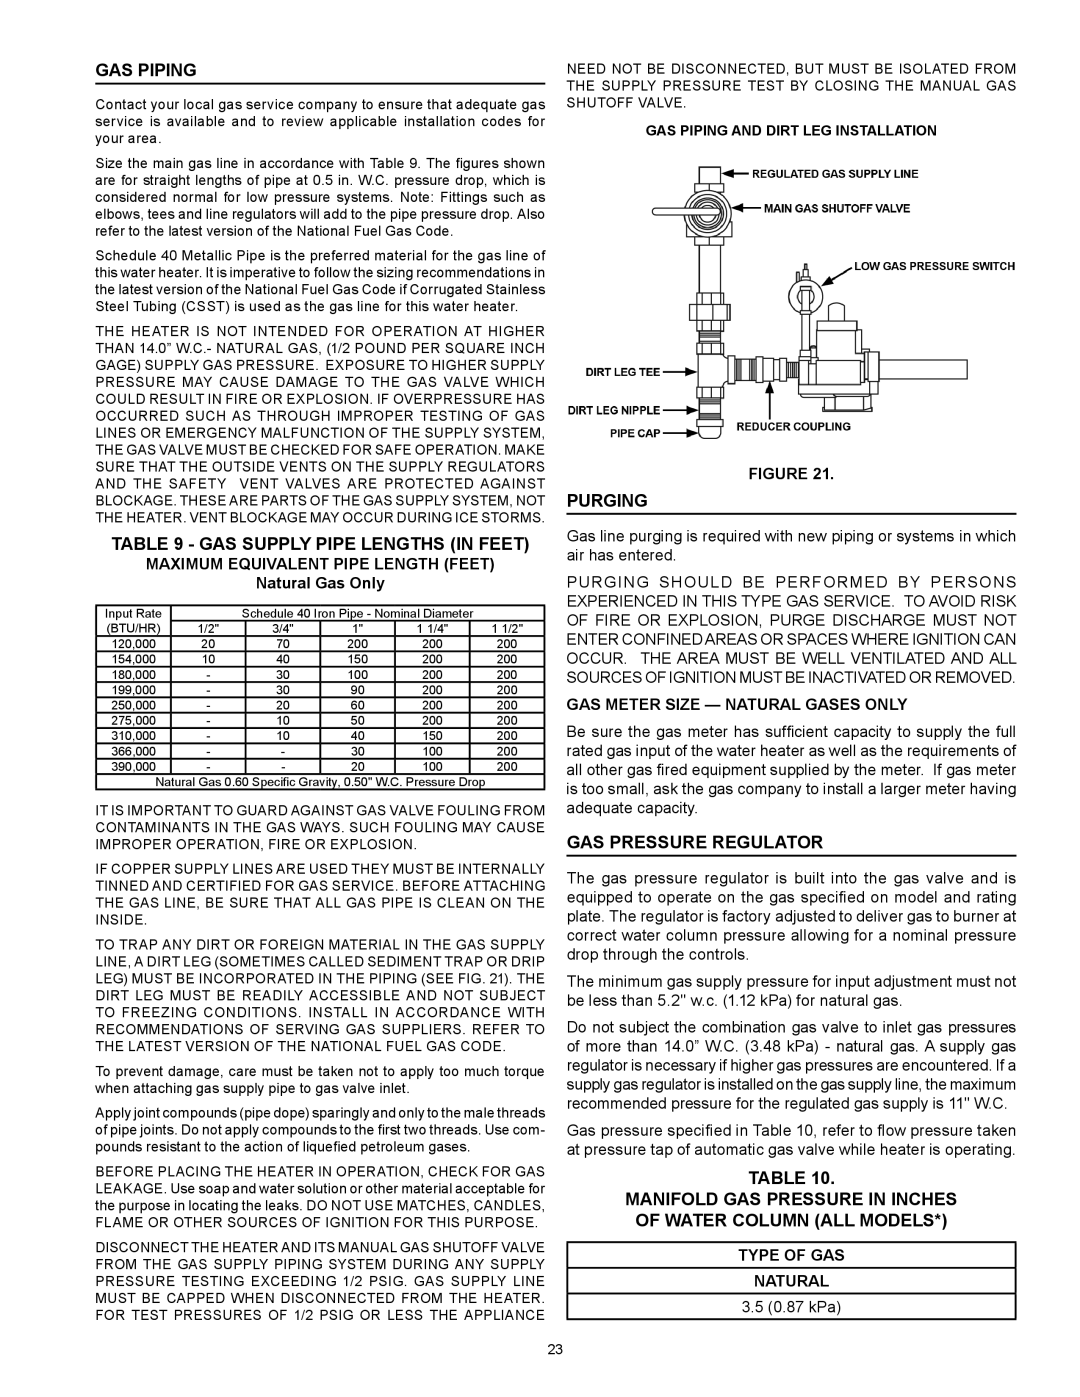 Reliance Water Heaters N71120NE Gas Piping, Gas Supply Pipe Lengths In Feet, Purging, Gas Pressure Regulator, Figure 